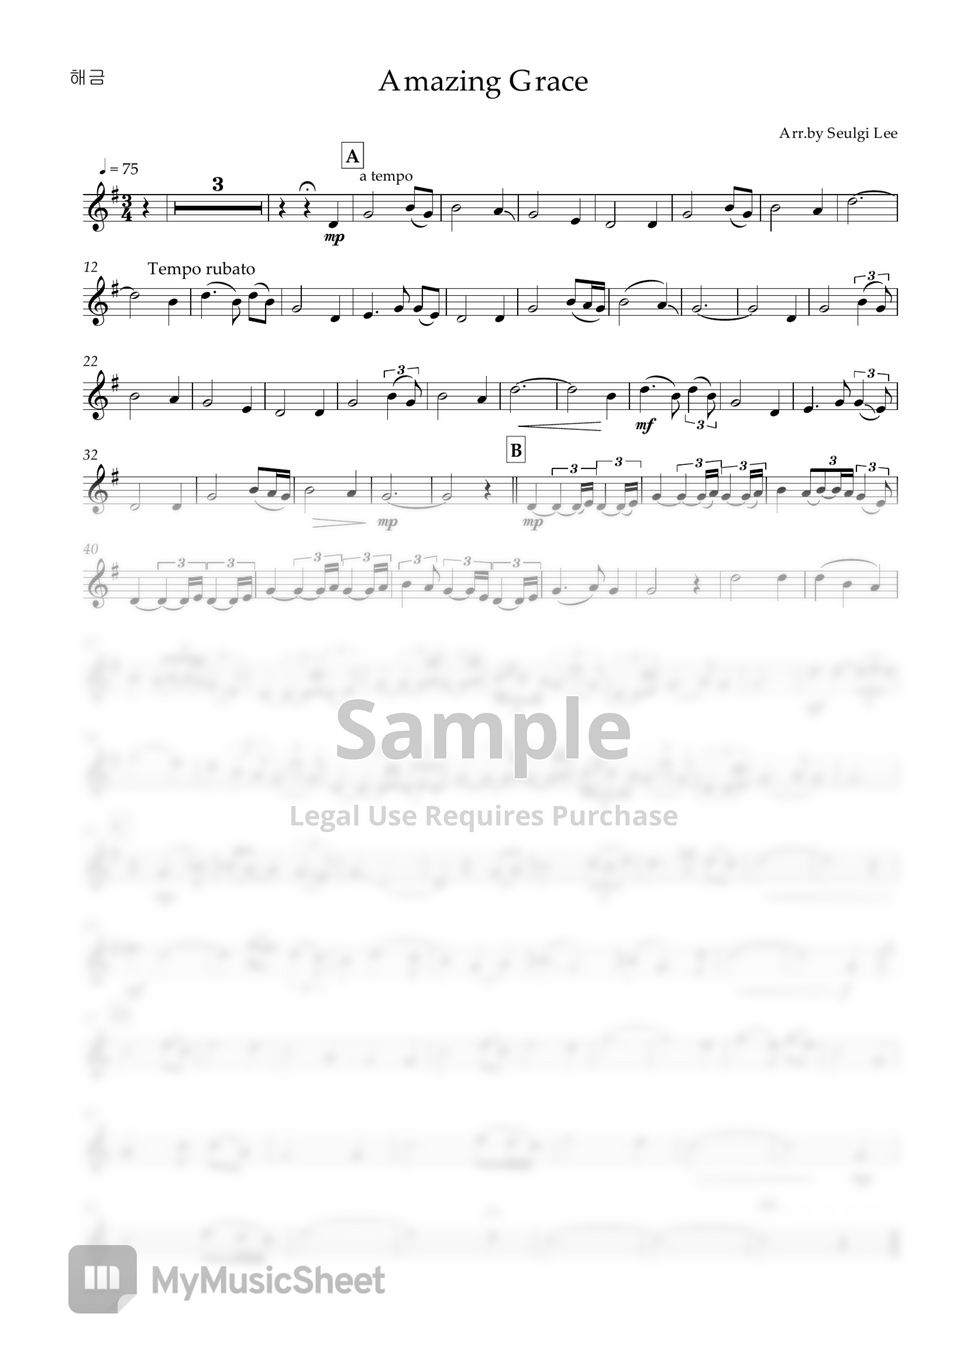 John Newton - Amazing Grace (Haegeum and Piano ver.) 어메이징그레이스 해금_피아노 by Seulgi Lee